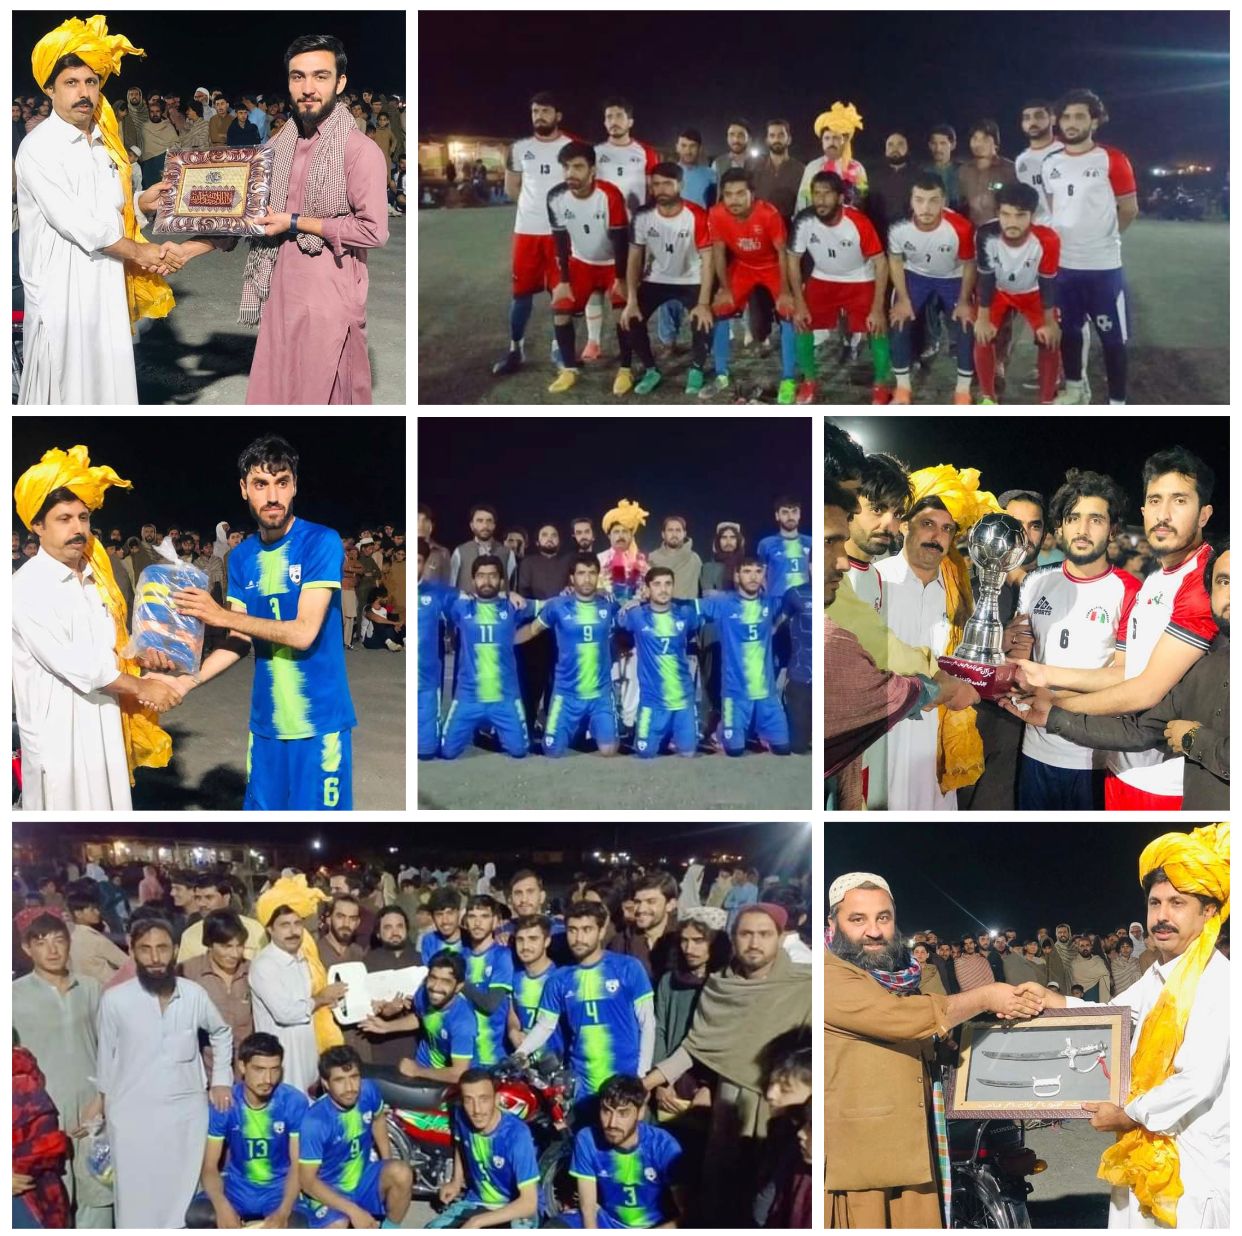 Recreational sports activities draw huge crowds in Balochistan